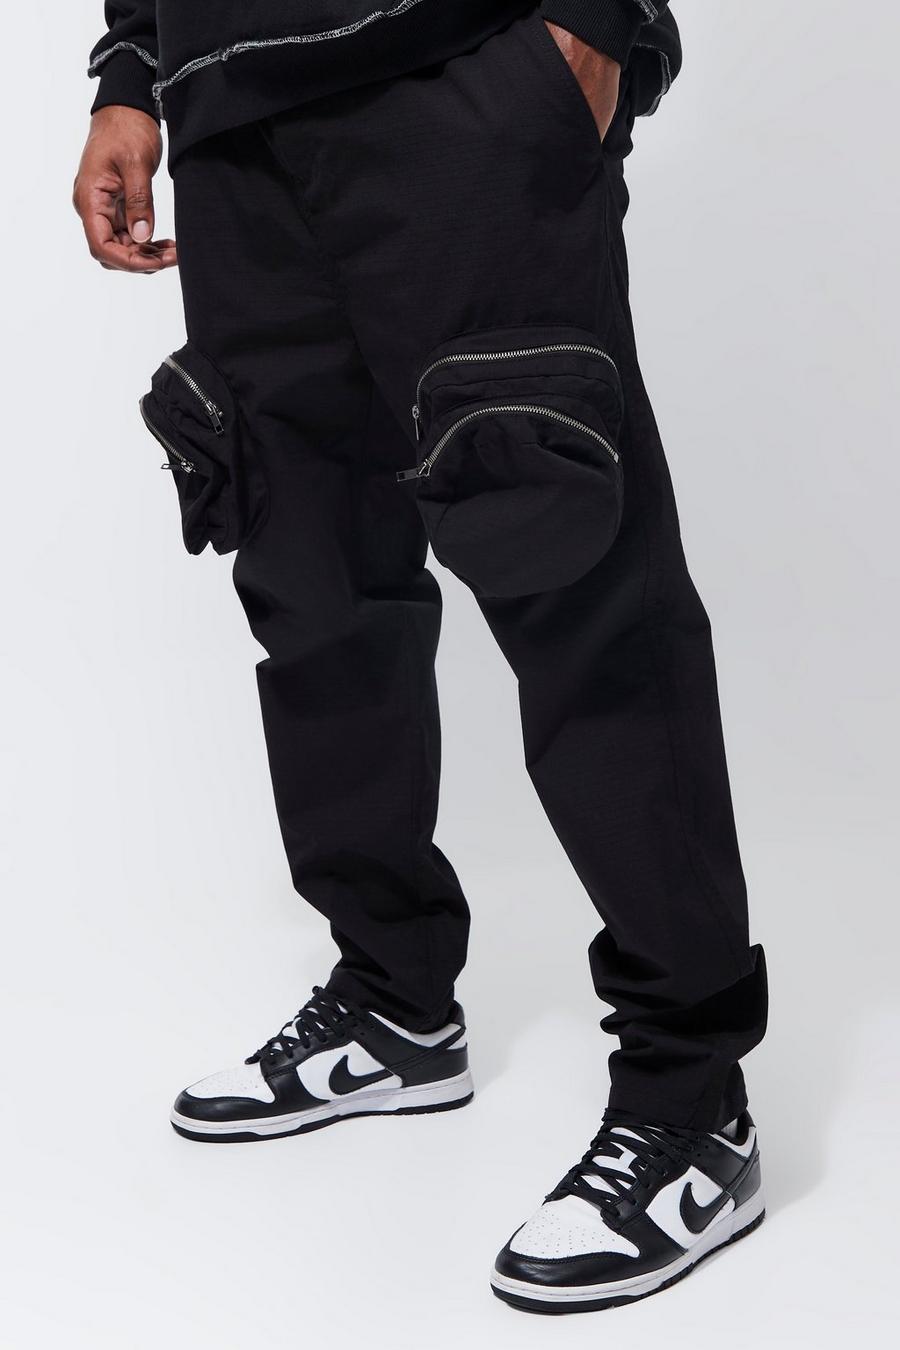 Pantalón Plus cargo ajustado elegante con cremallera 3D, Black nero